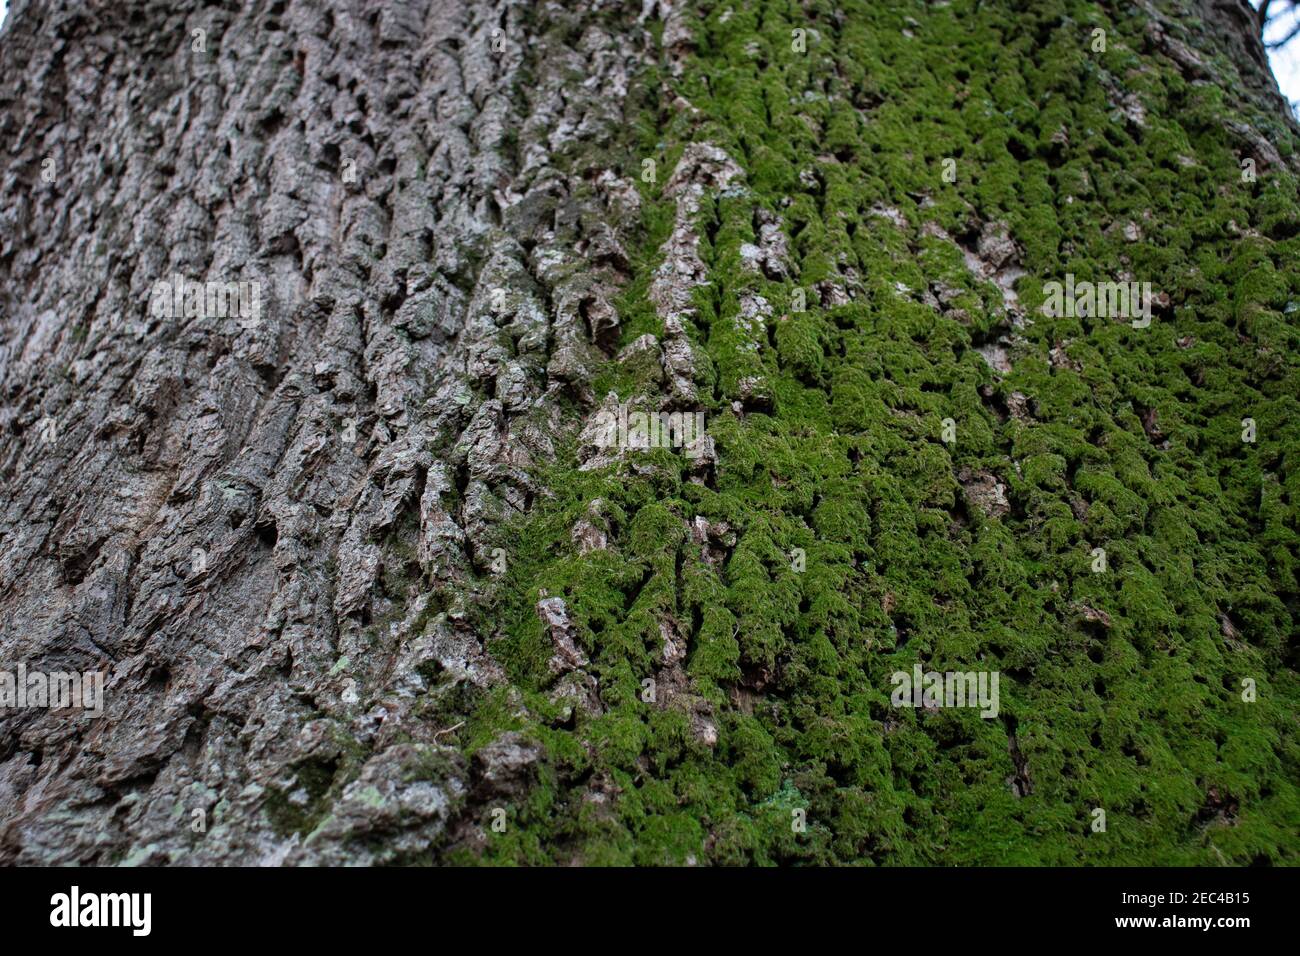 Green moss growing on rough tree bark Stock Photo